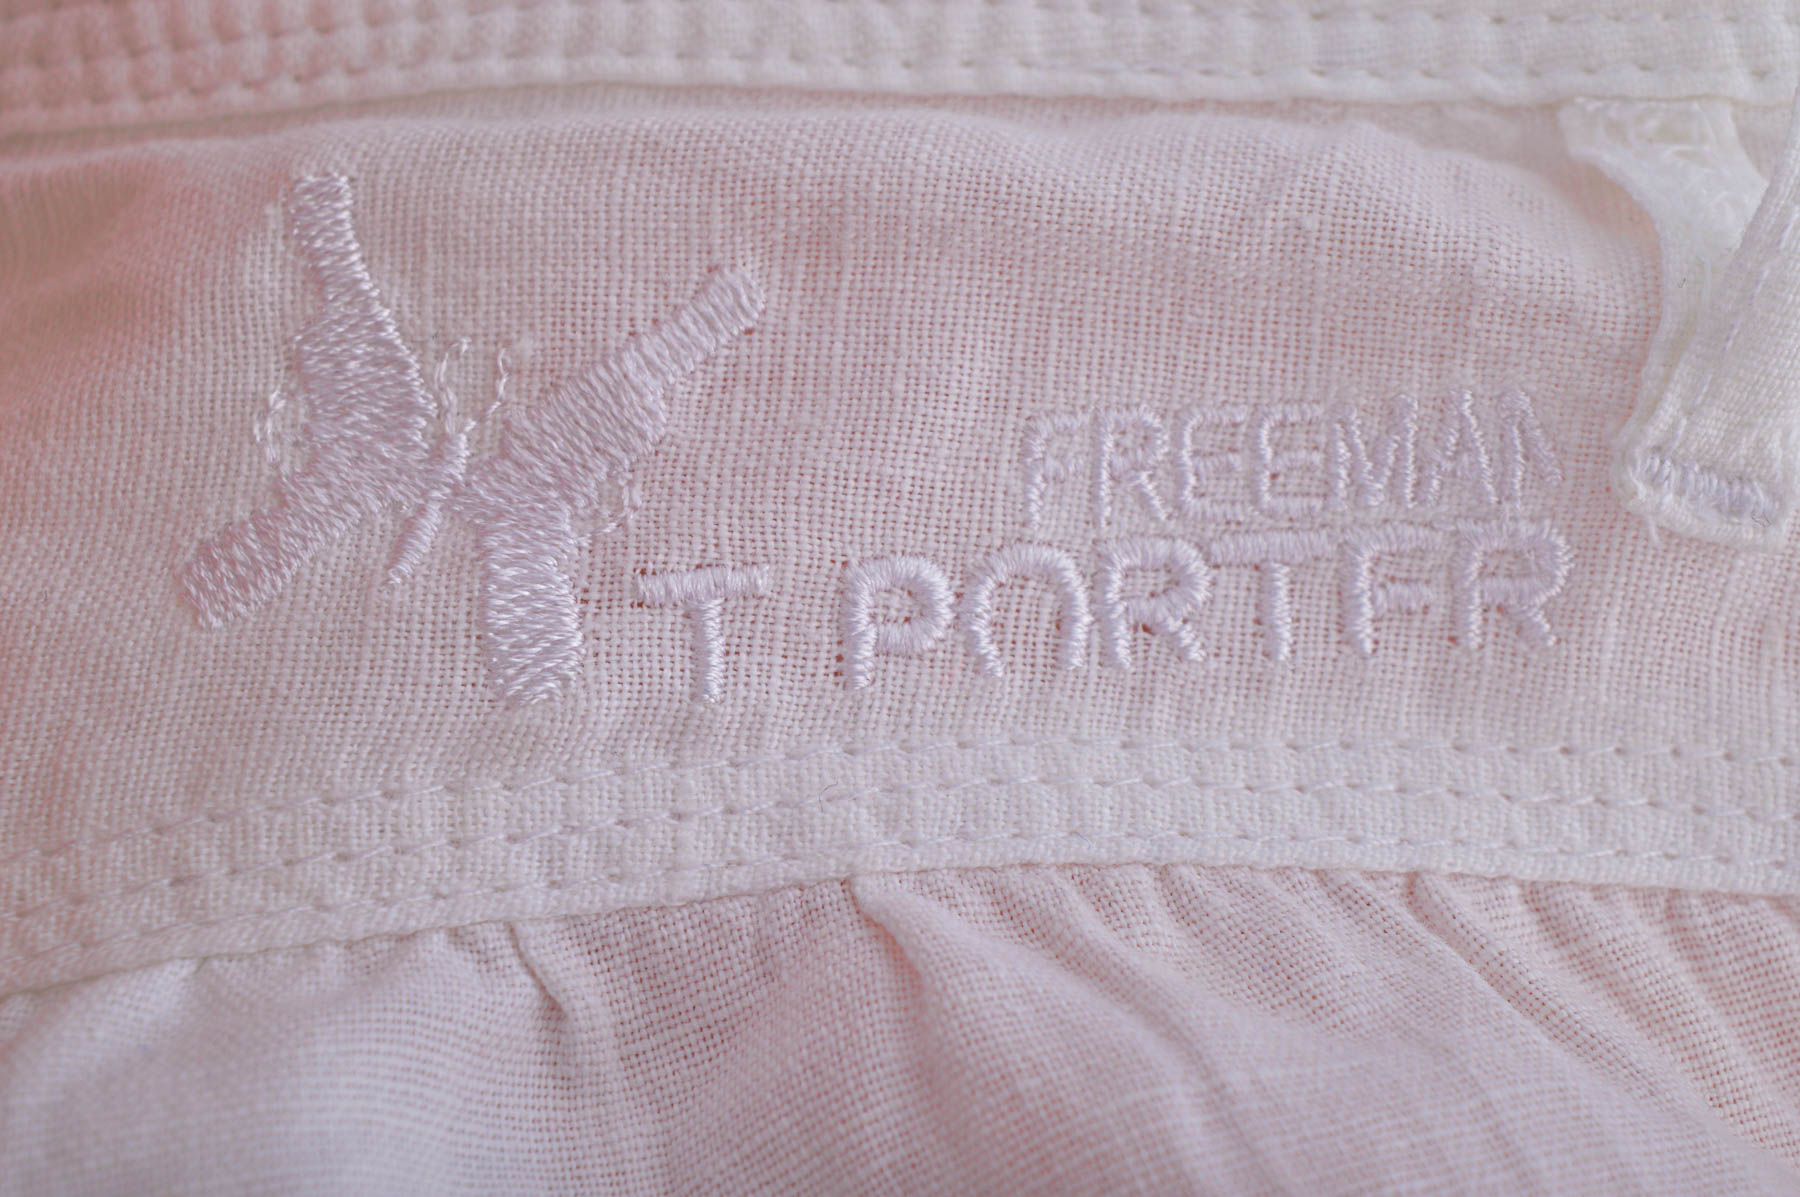 Female shorts - Freeman T. Porter - 2